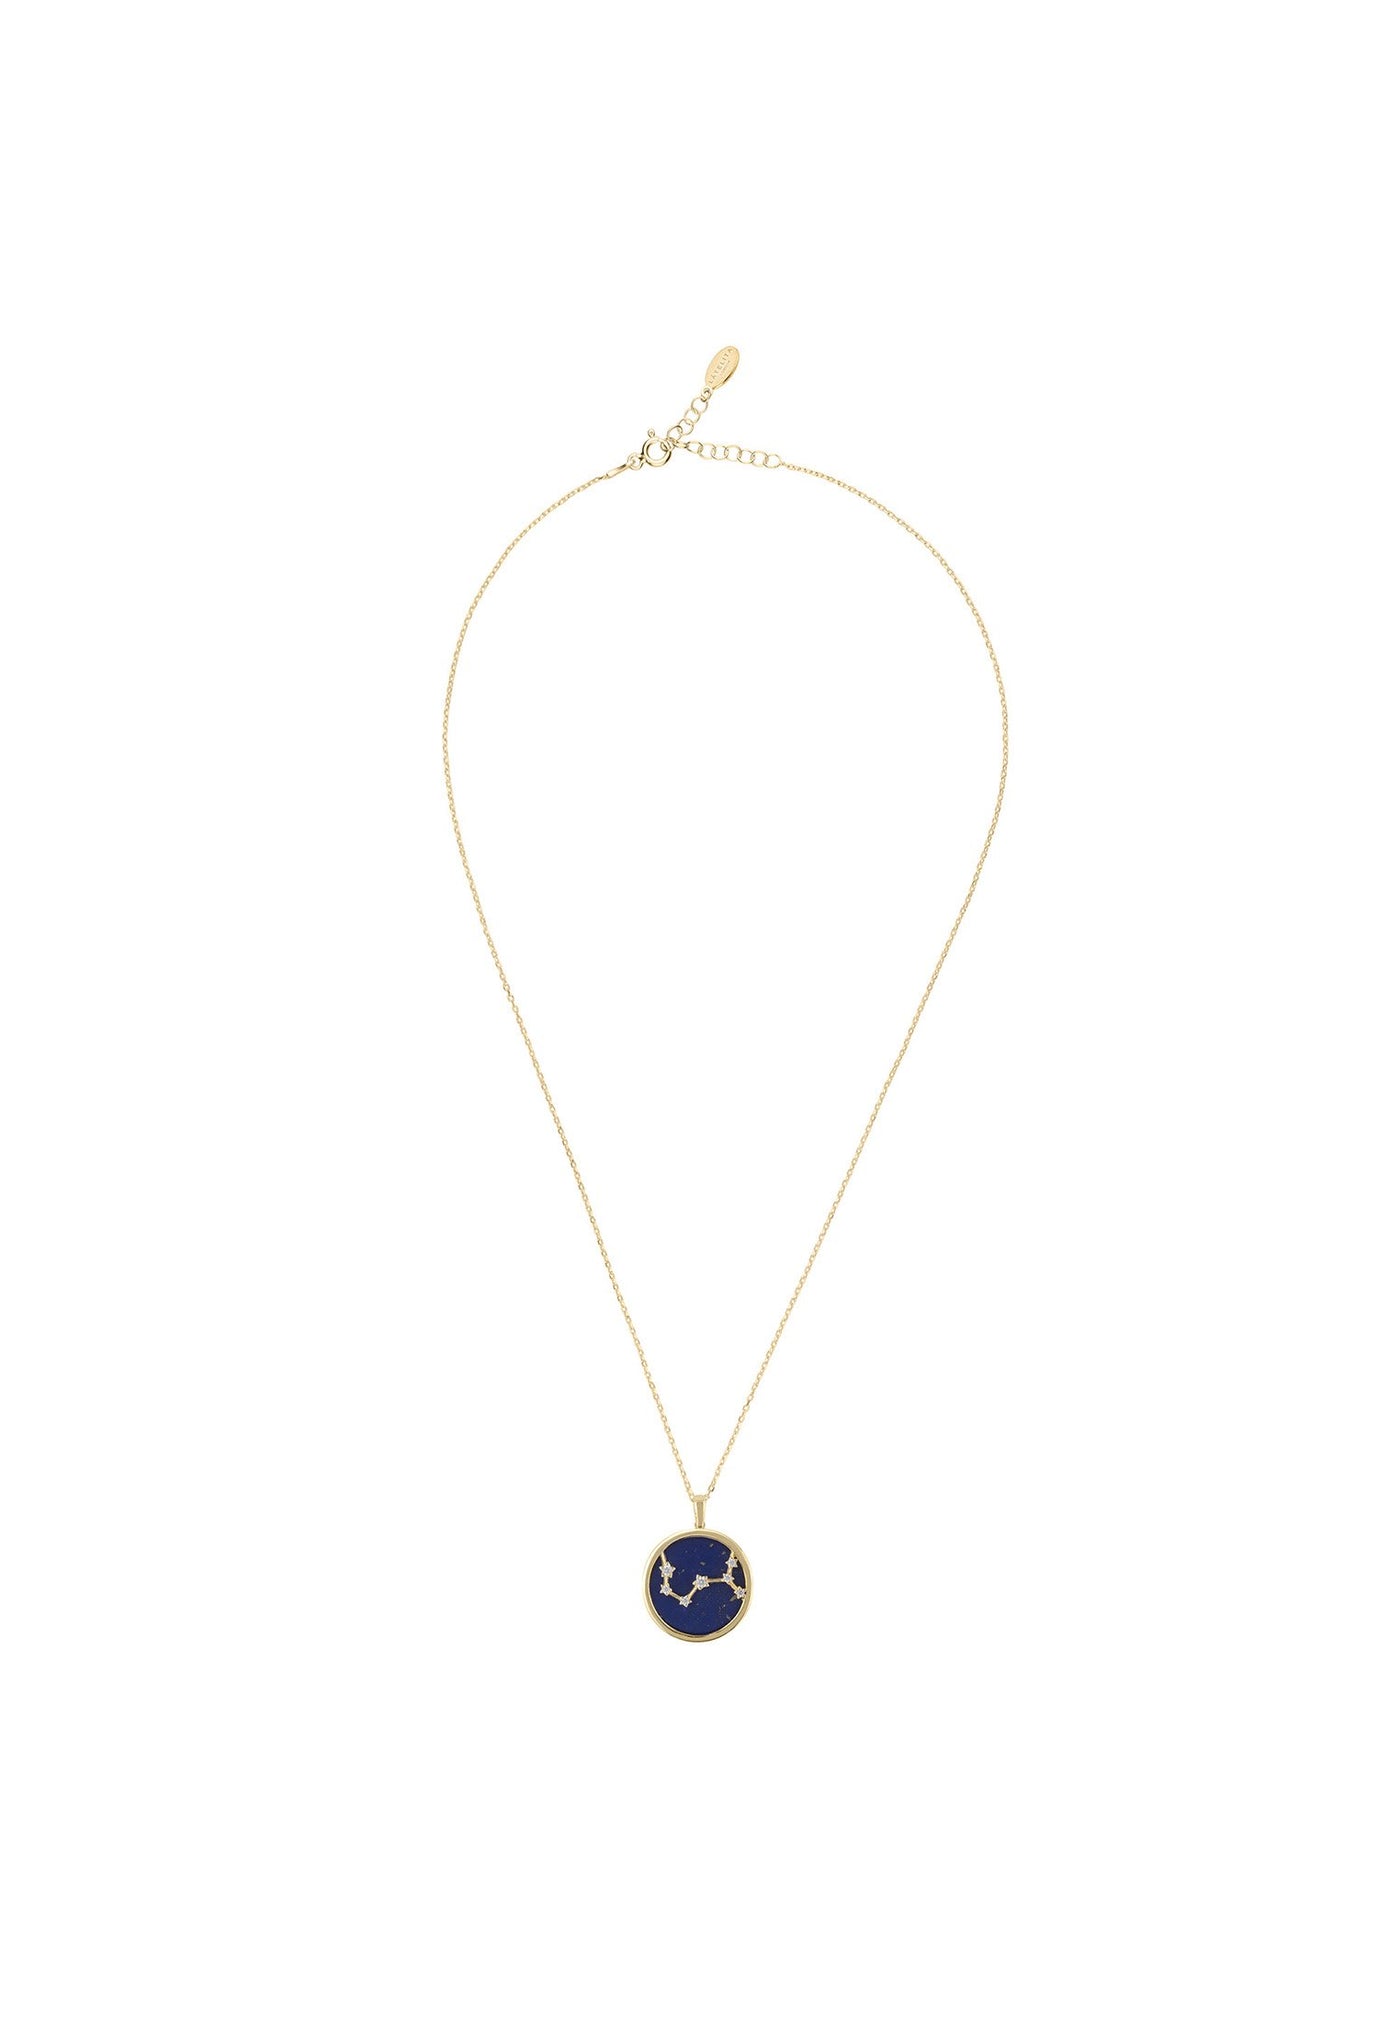 Scorpio necklace - 22 carat gold plated - lapis lazuli with white zirconia